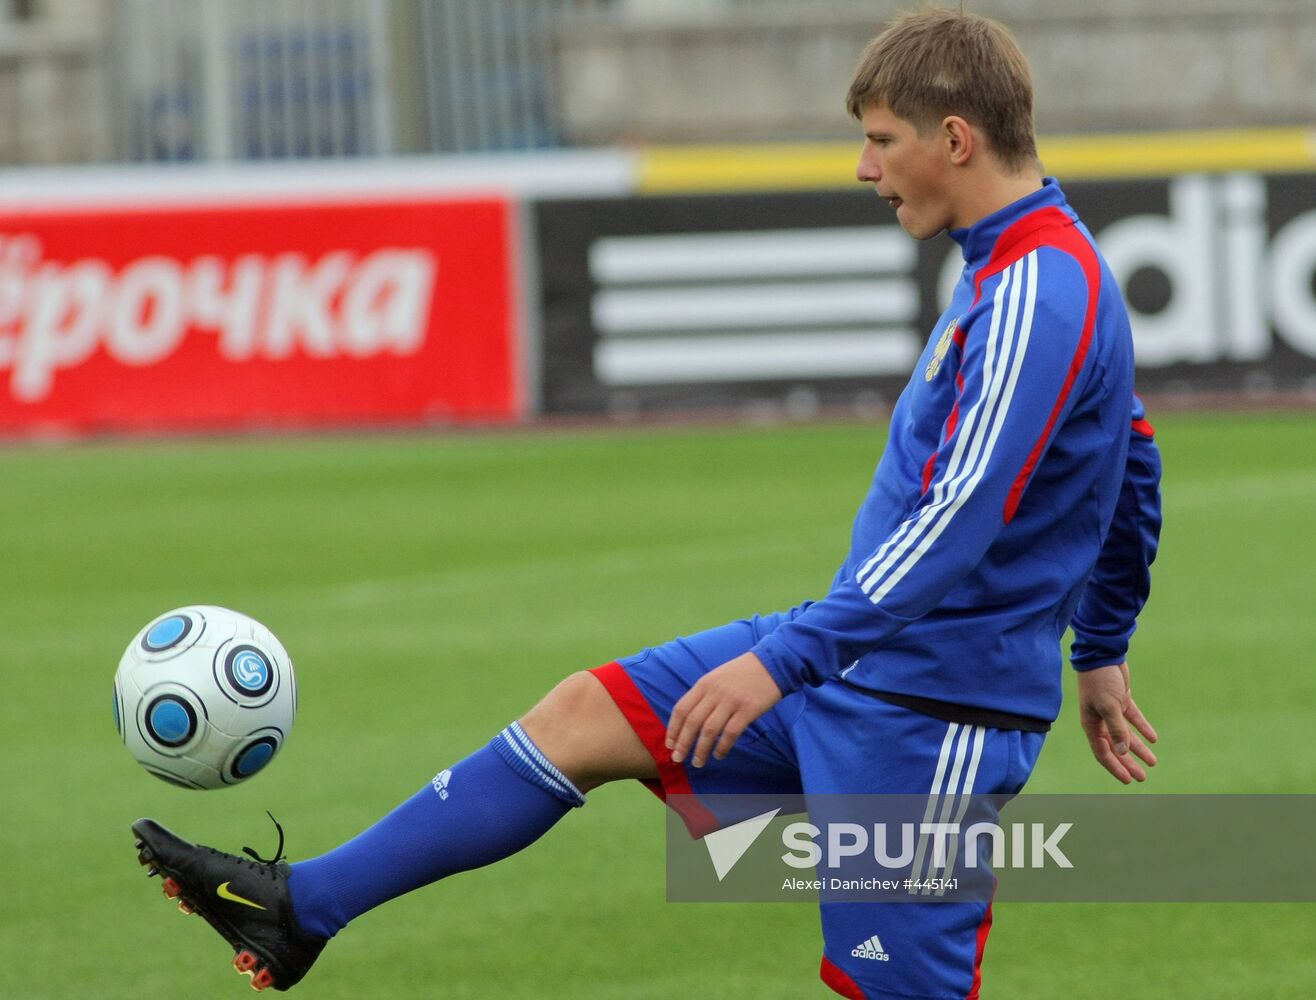 Football player Andrei Arshavin